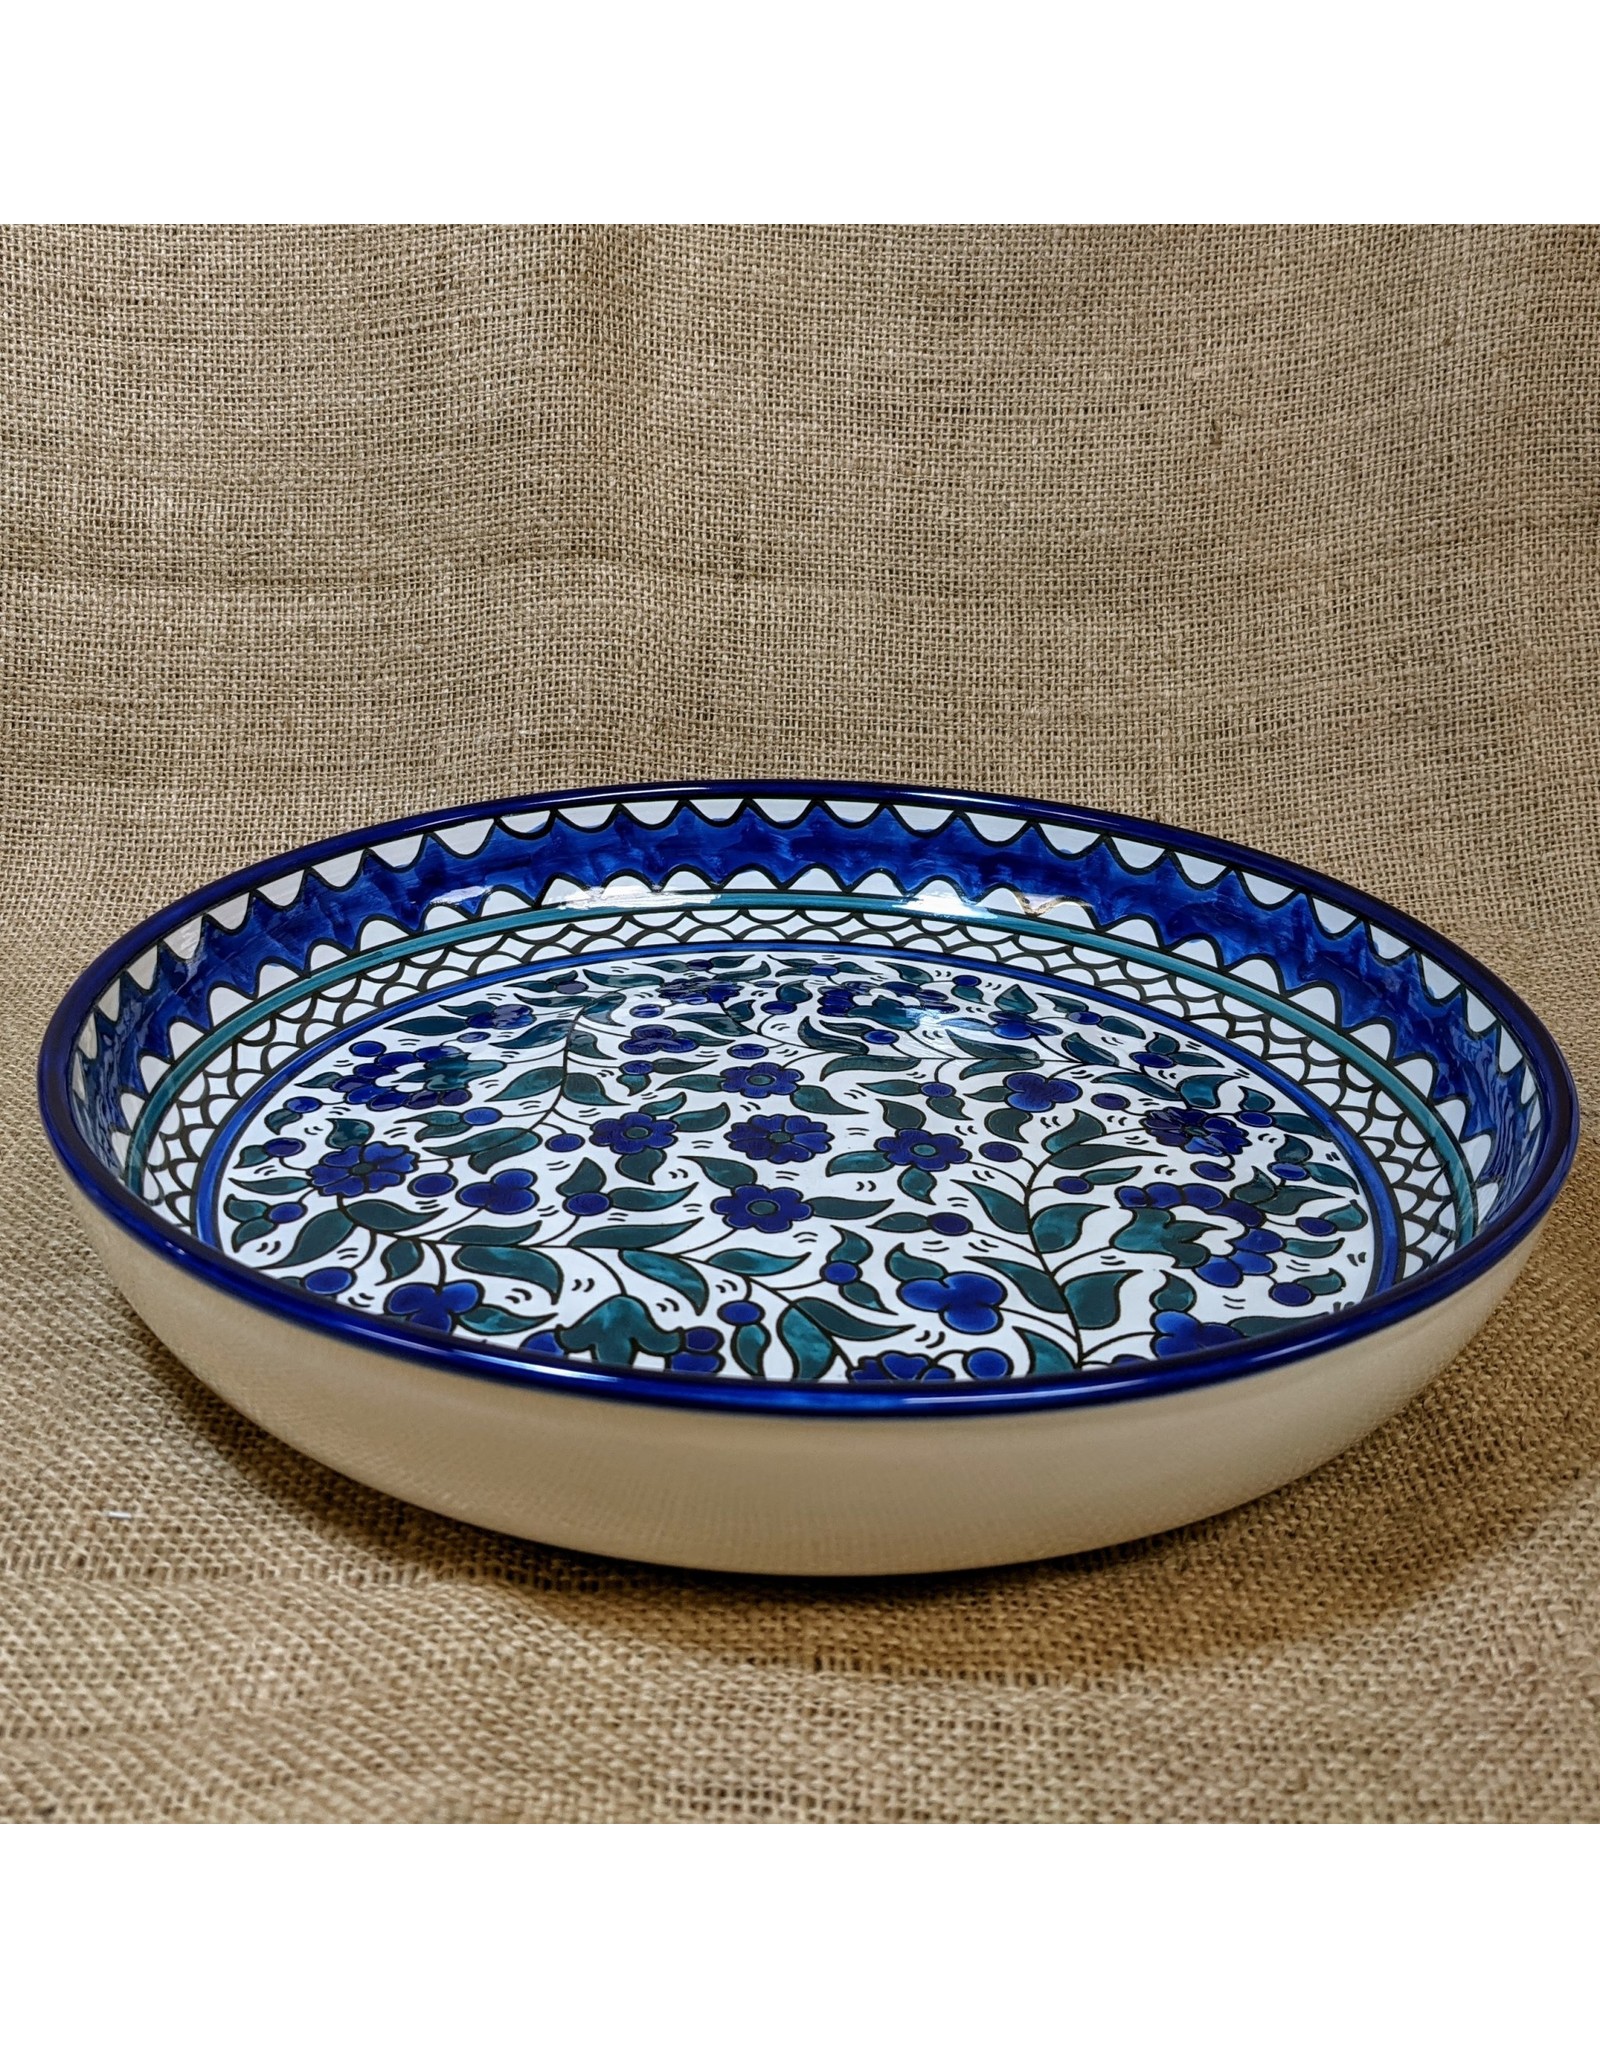 TTV USA Blue Floral Platter, Palestine